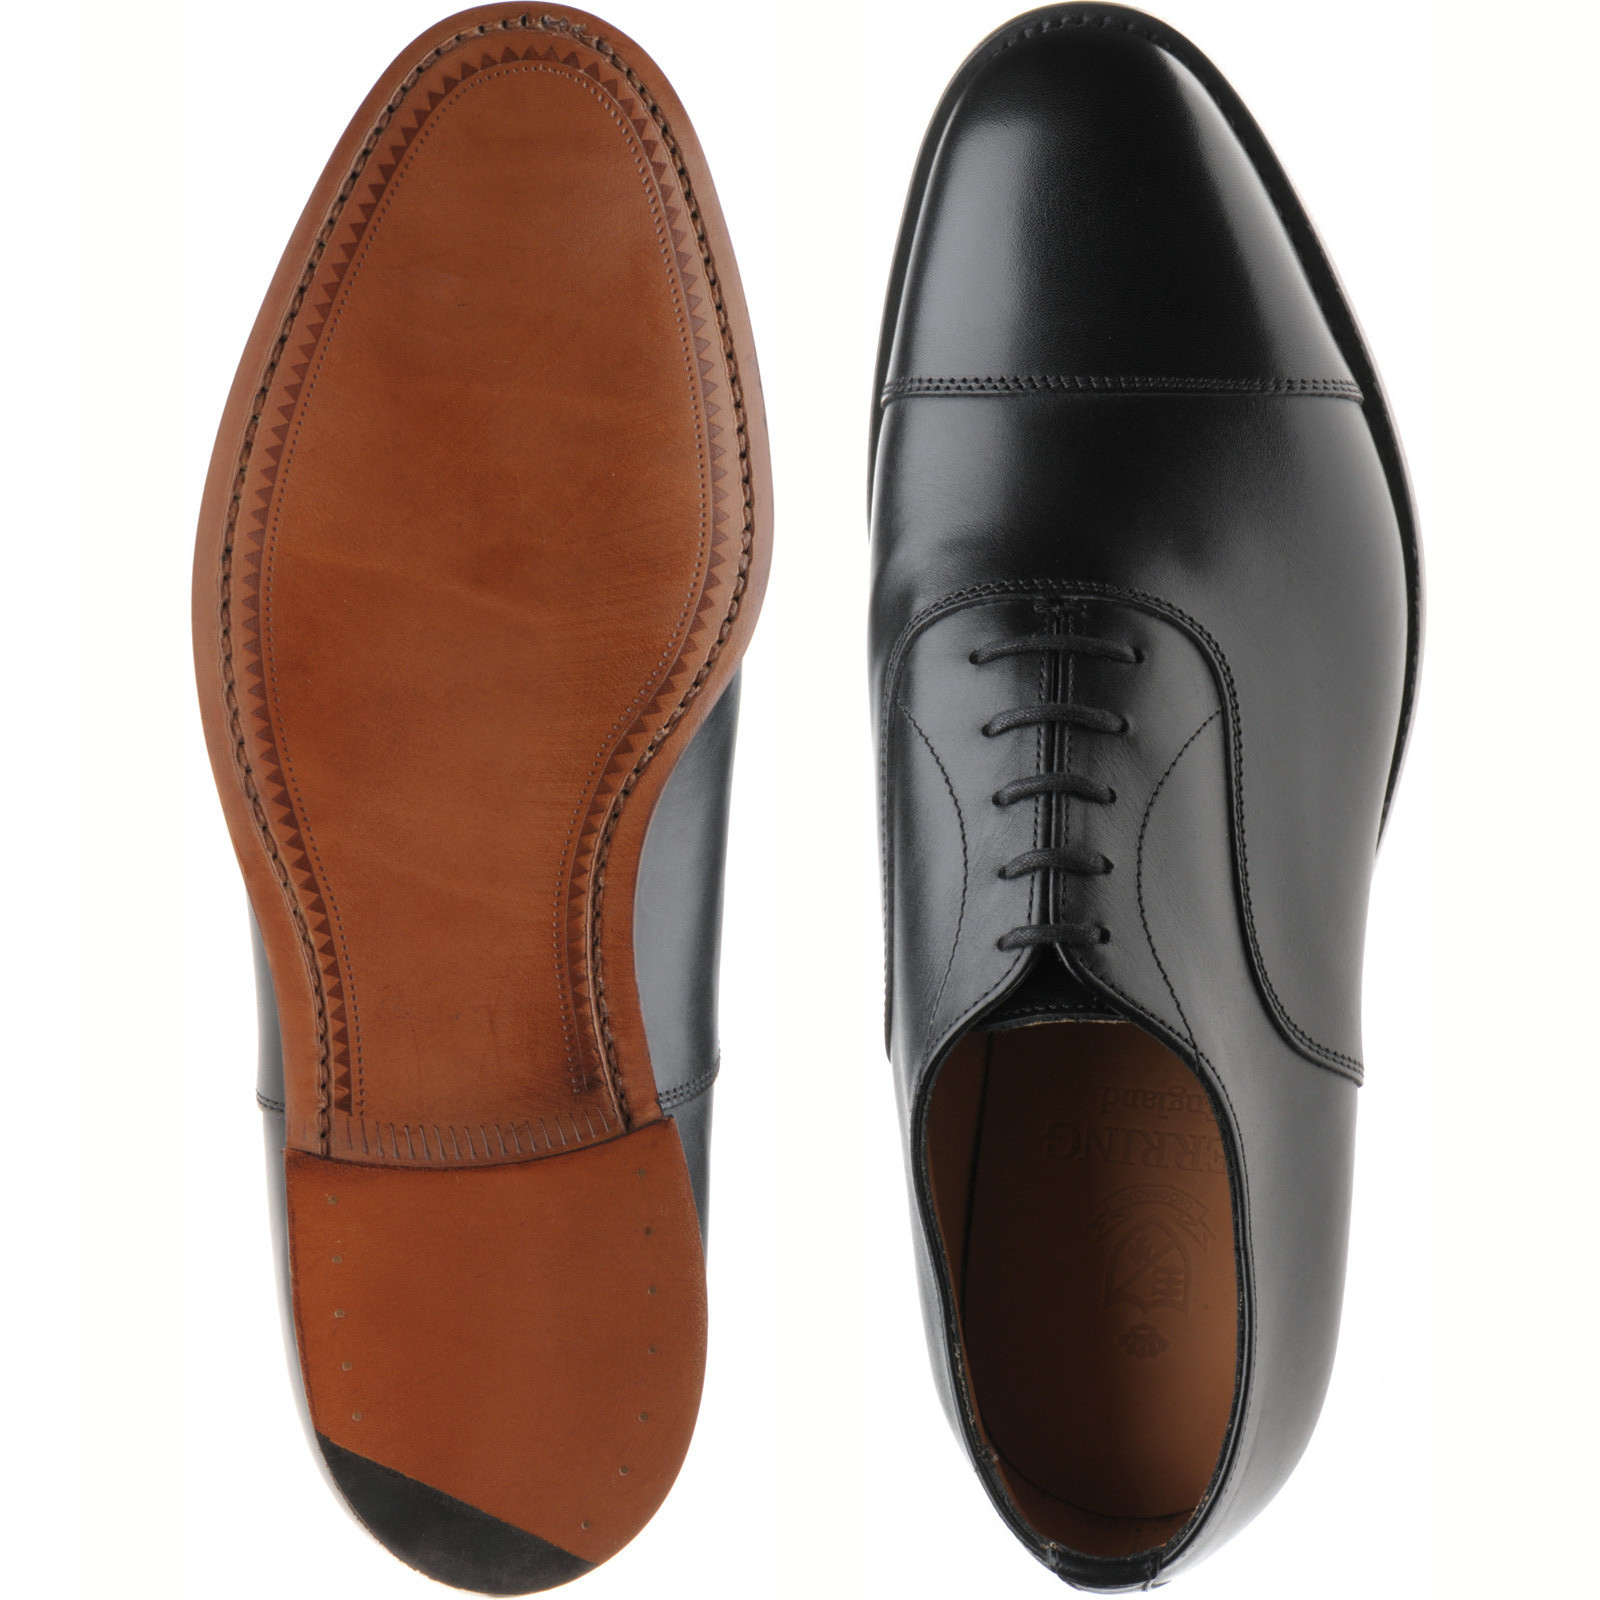 Herring shoes | Herring Premier | Headingley Oxfords in Black Calf at ...